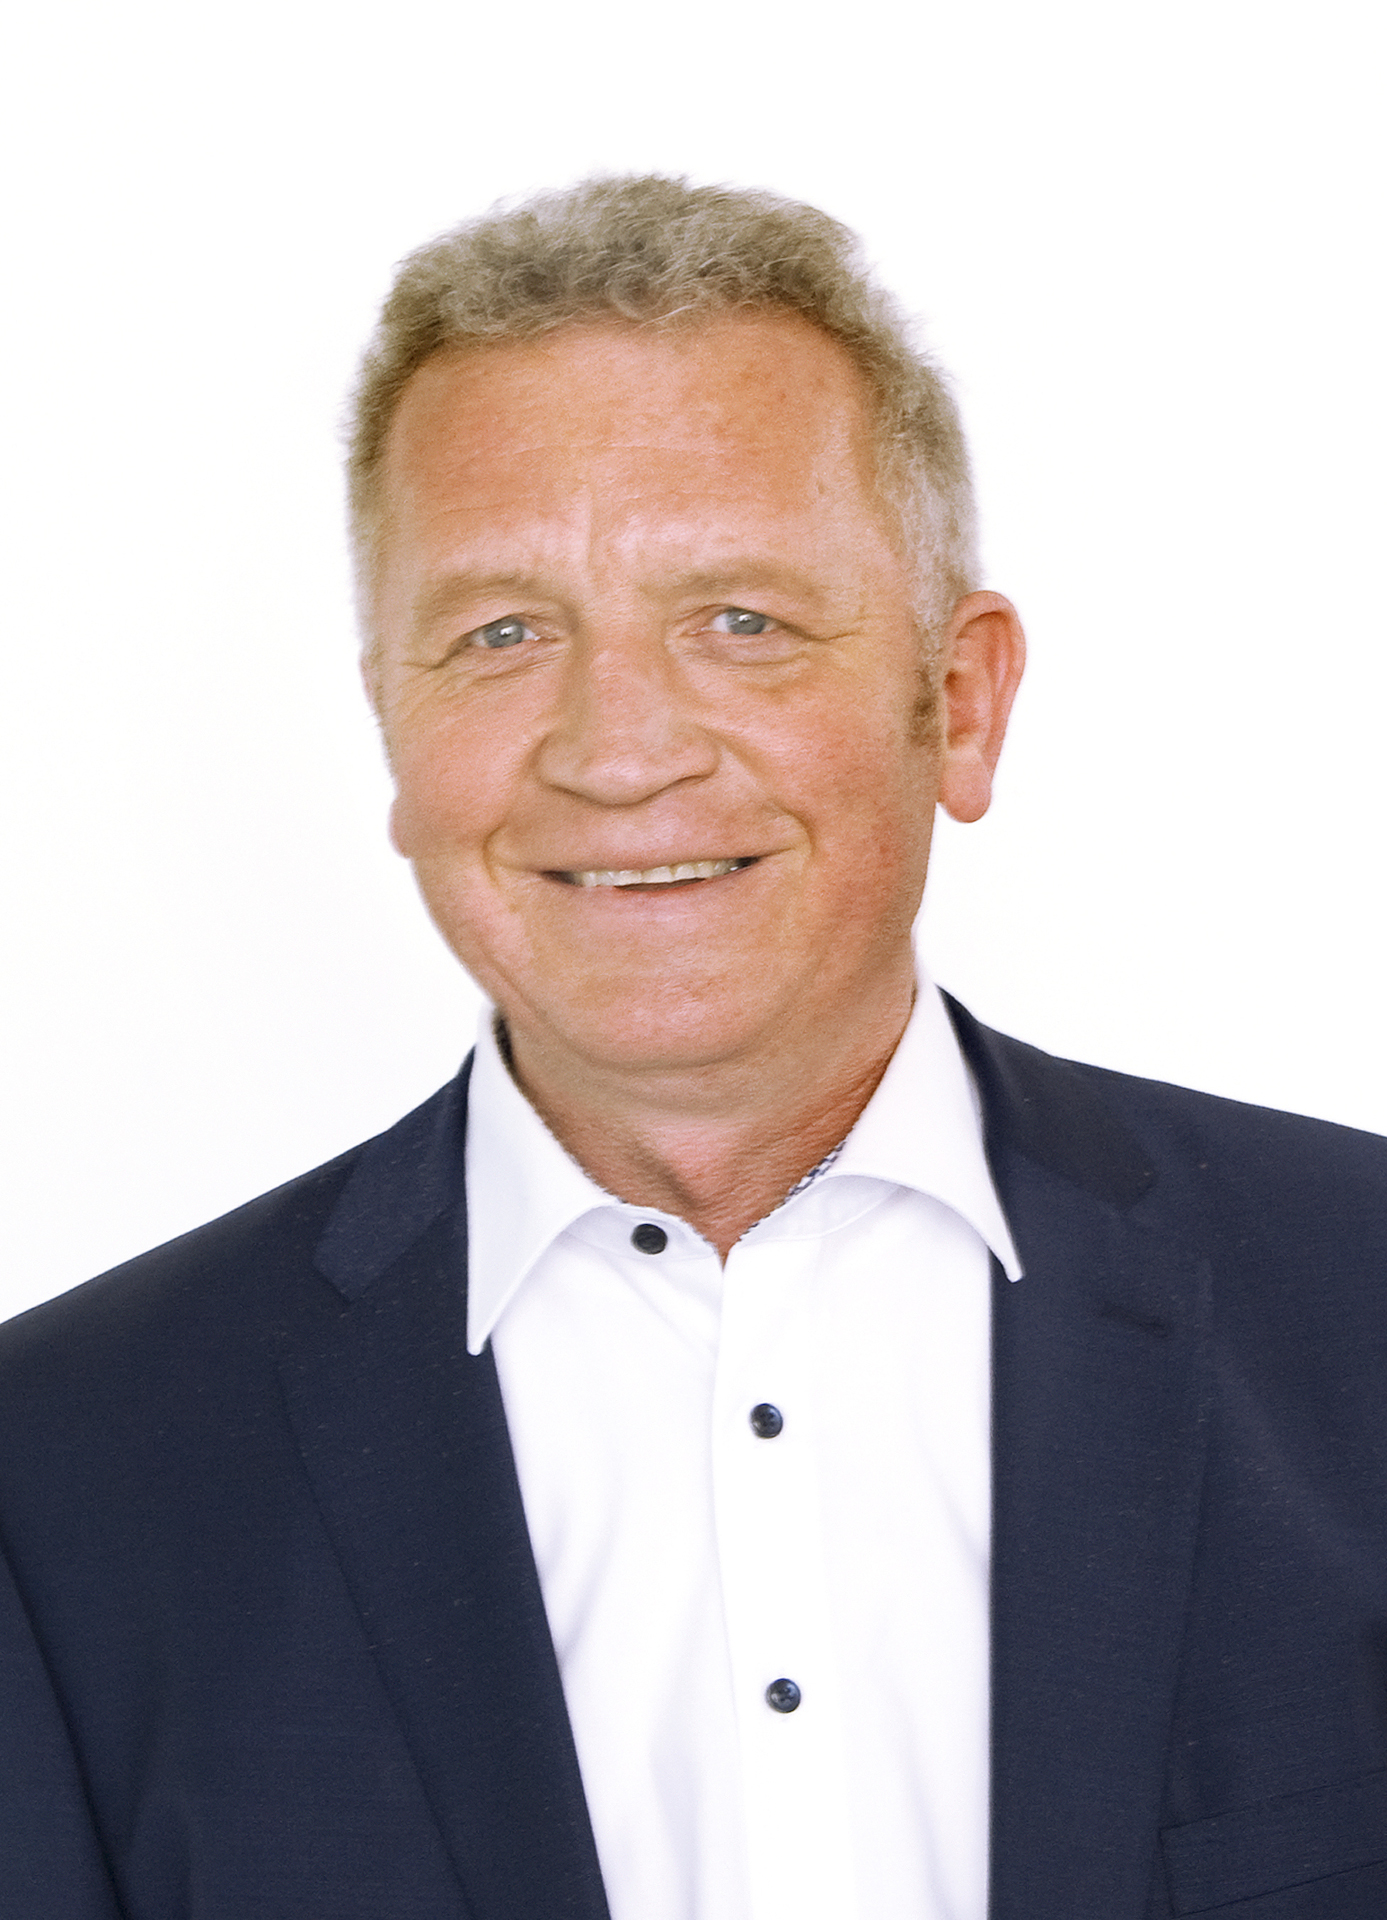 Jakobfeuerborn, Hans-Peter (CDU)